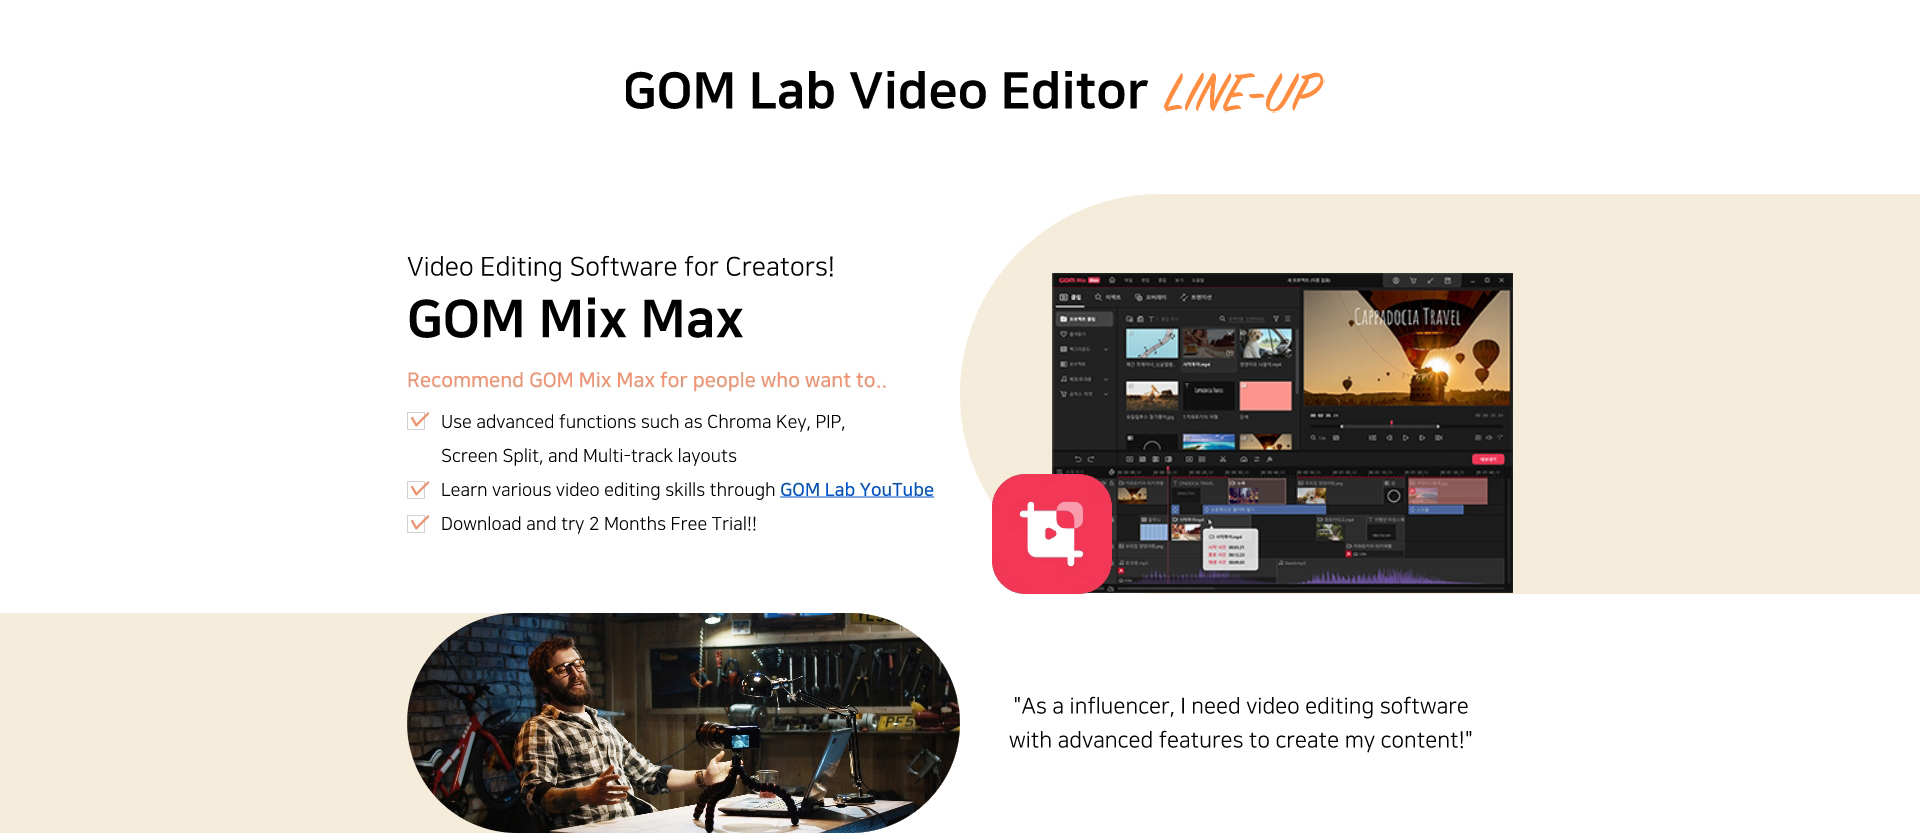 GOM Lab Video Editor Line-Up